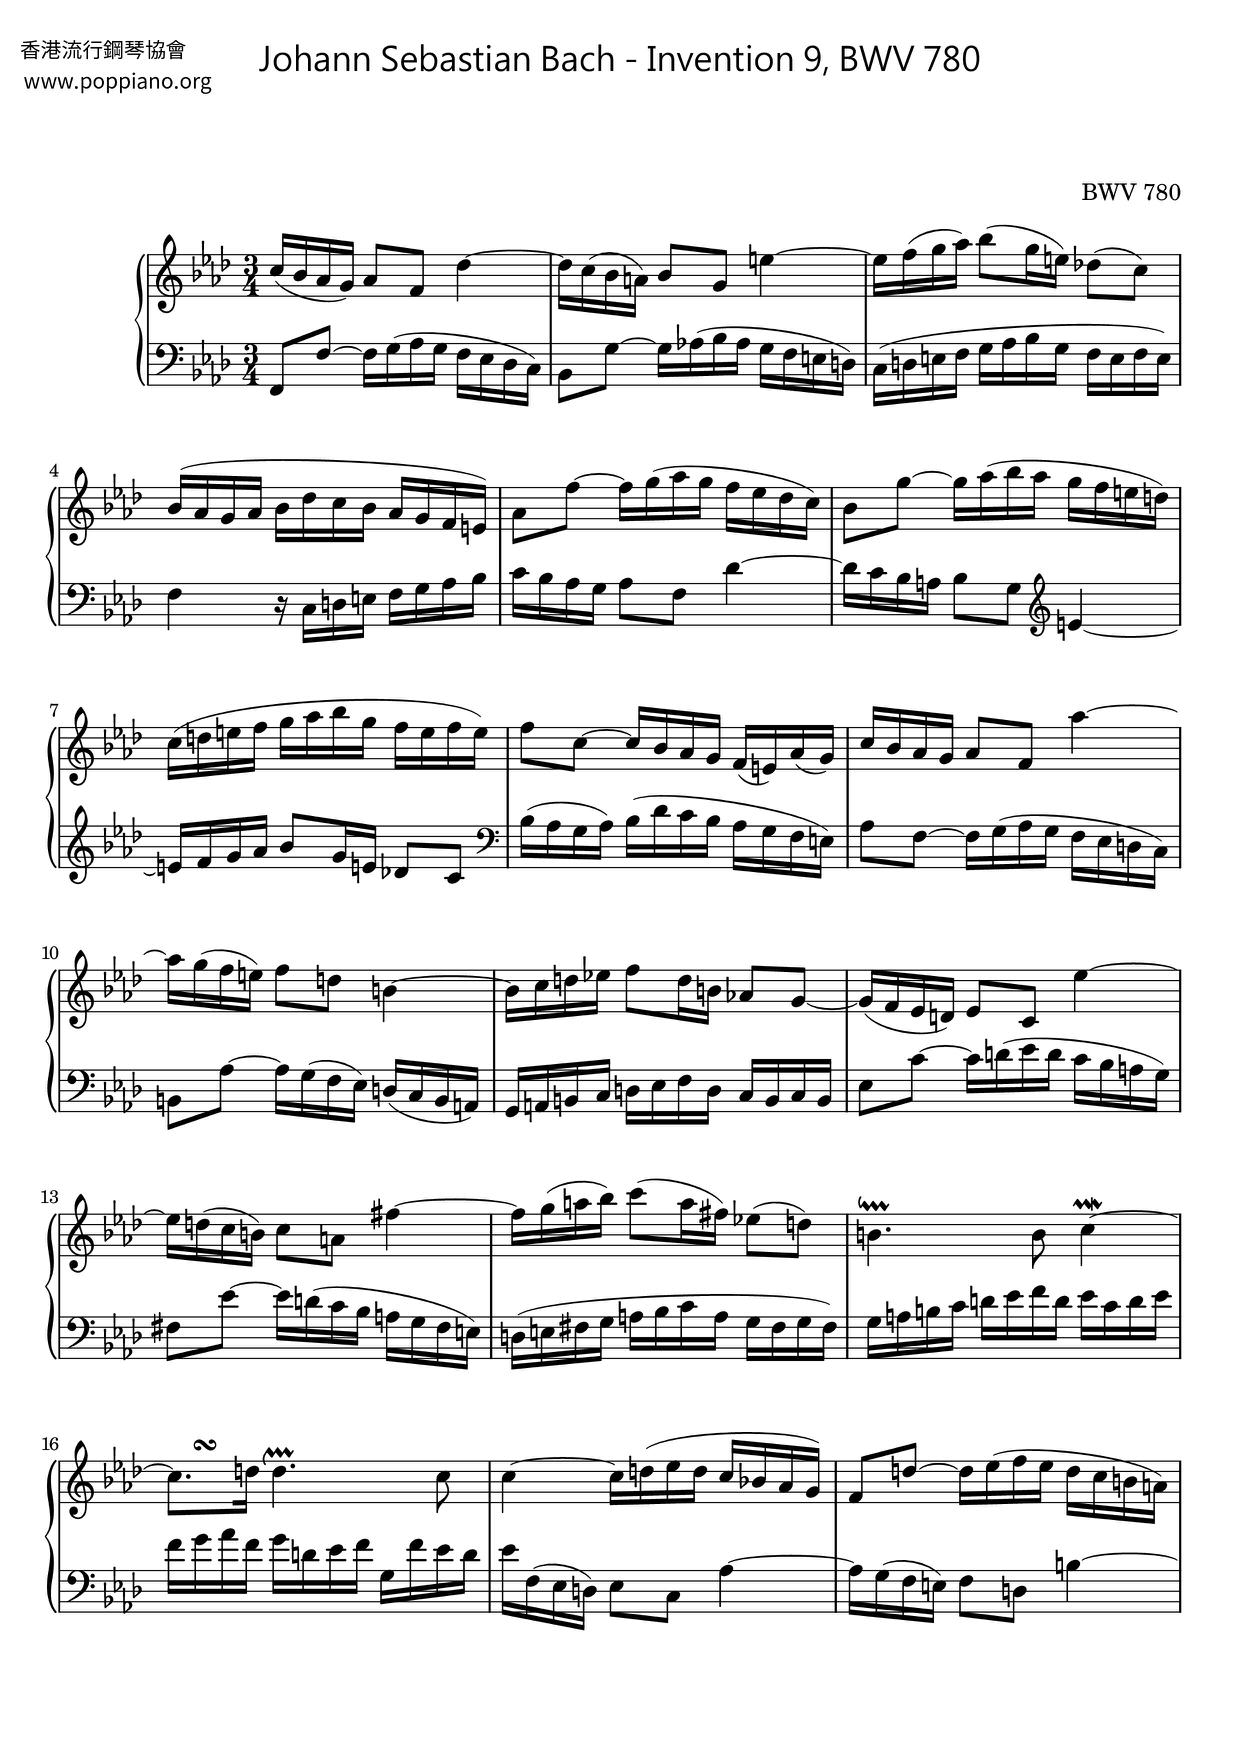 Invention 9, BWV 780ピアノ譜